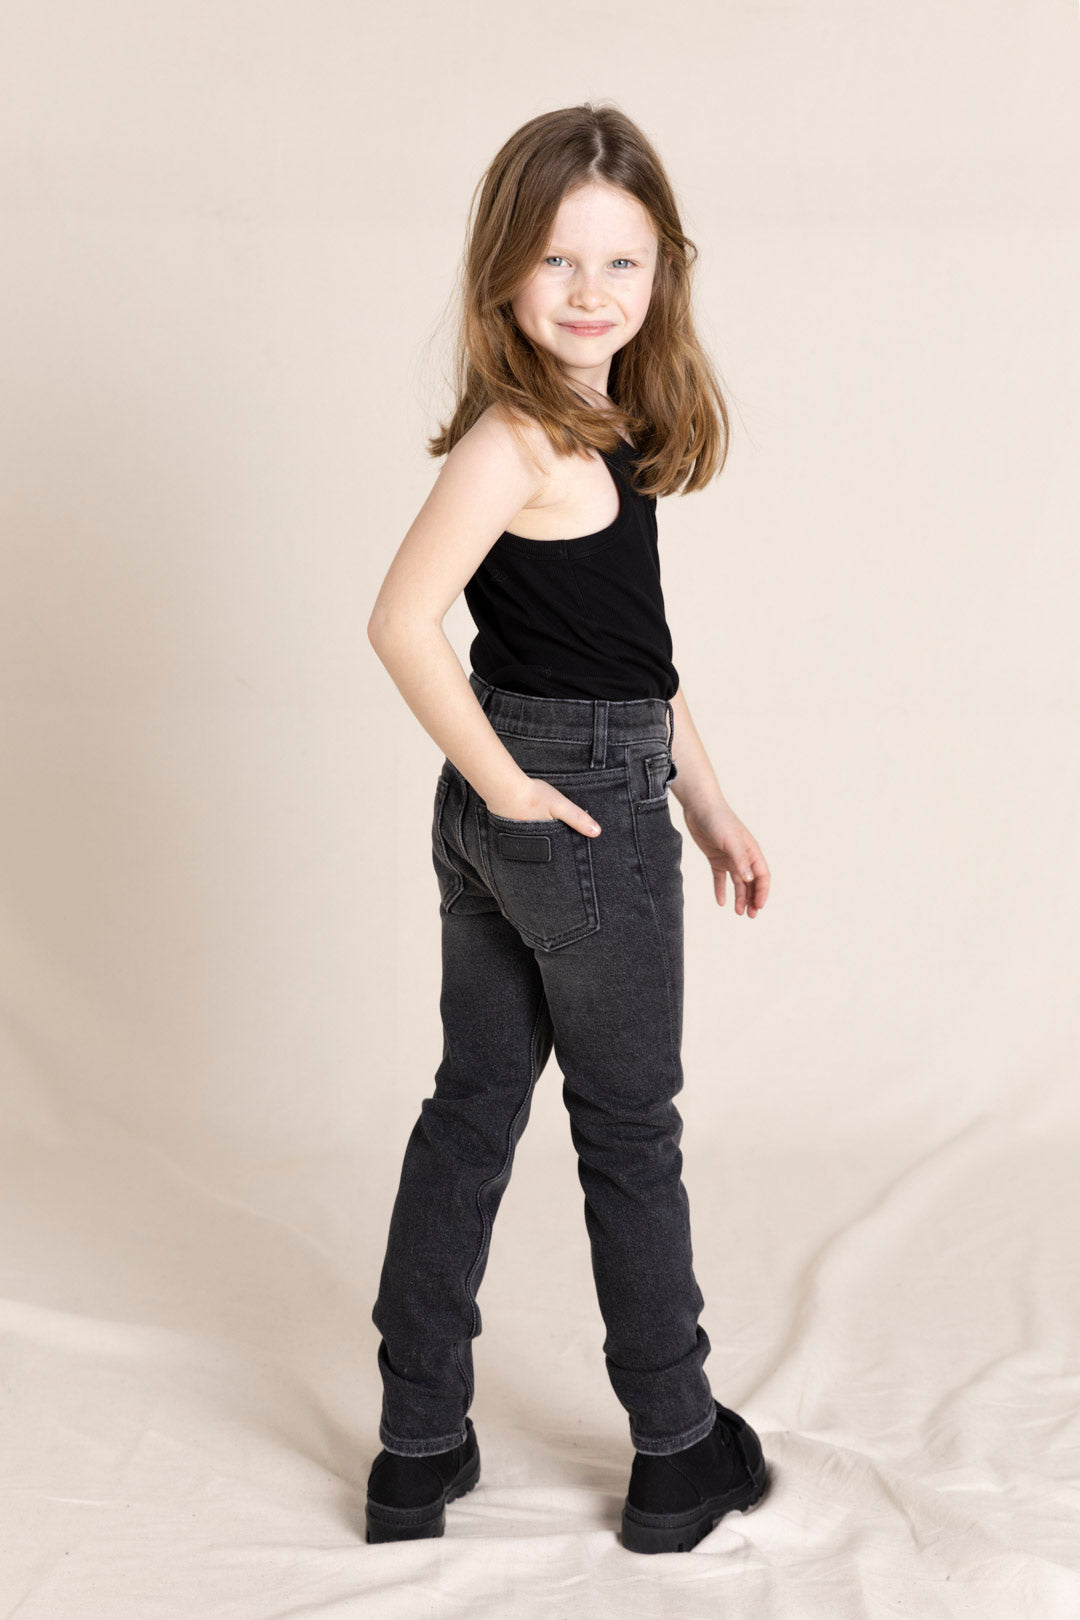 ICON Grey Denim - 5-Pocket Slim Fit Jeans | Women